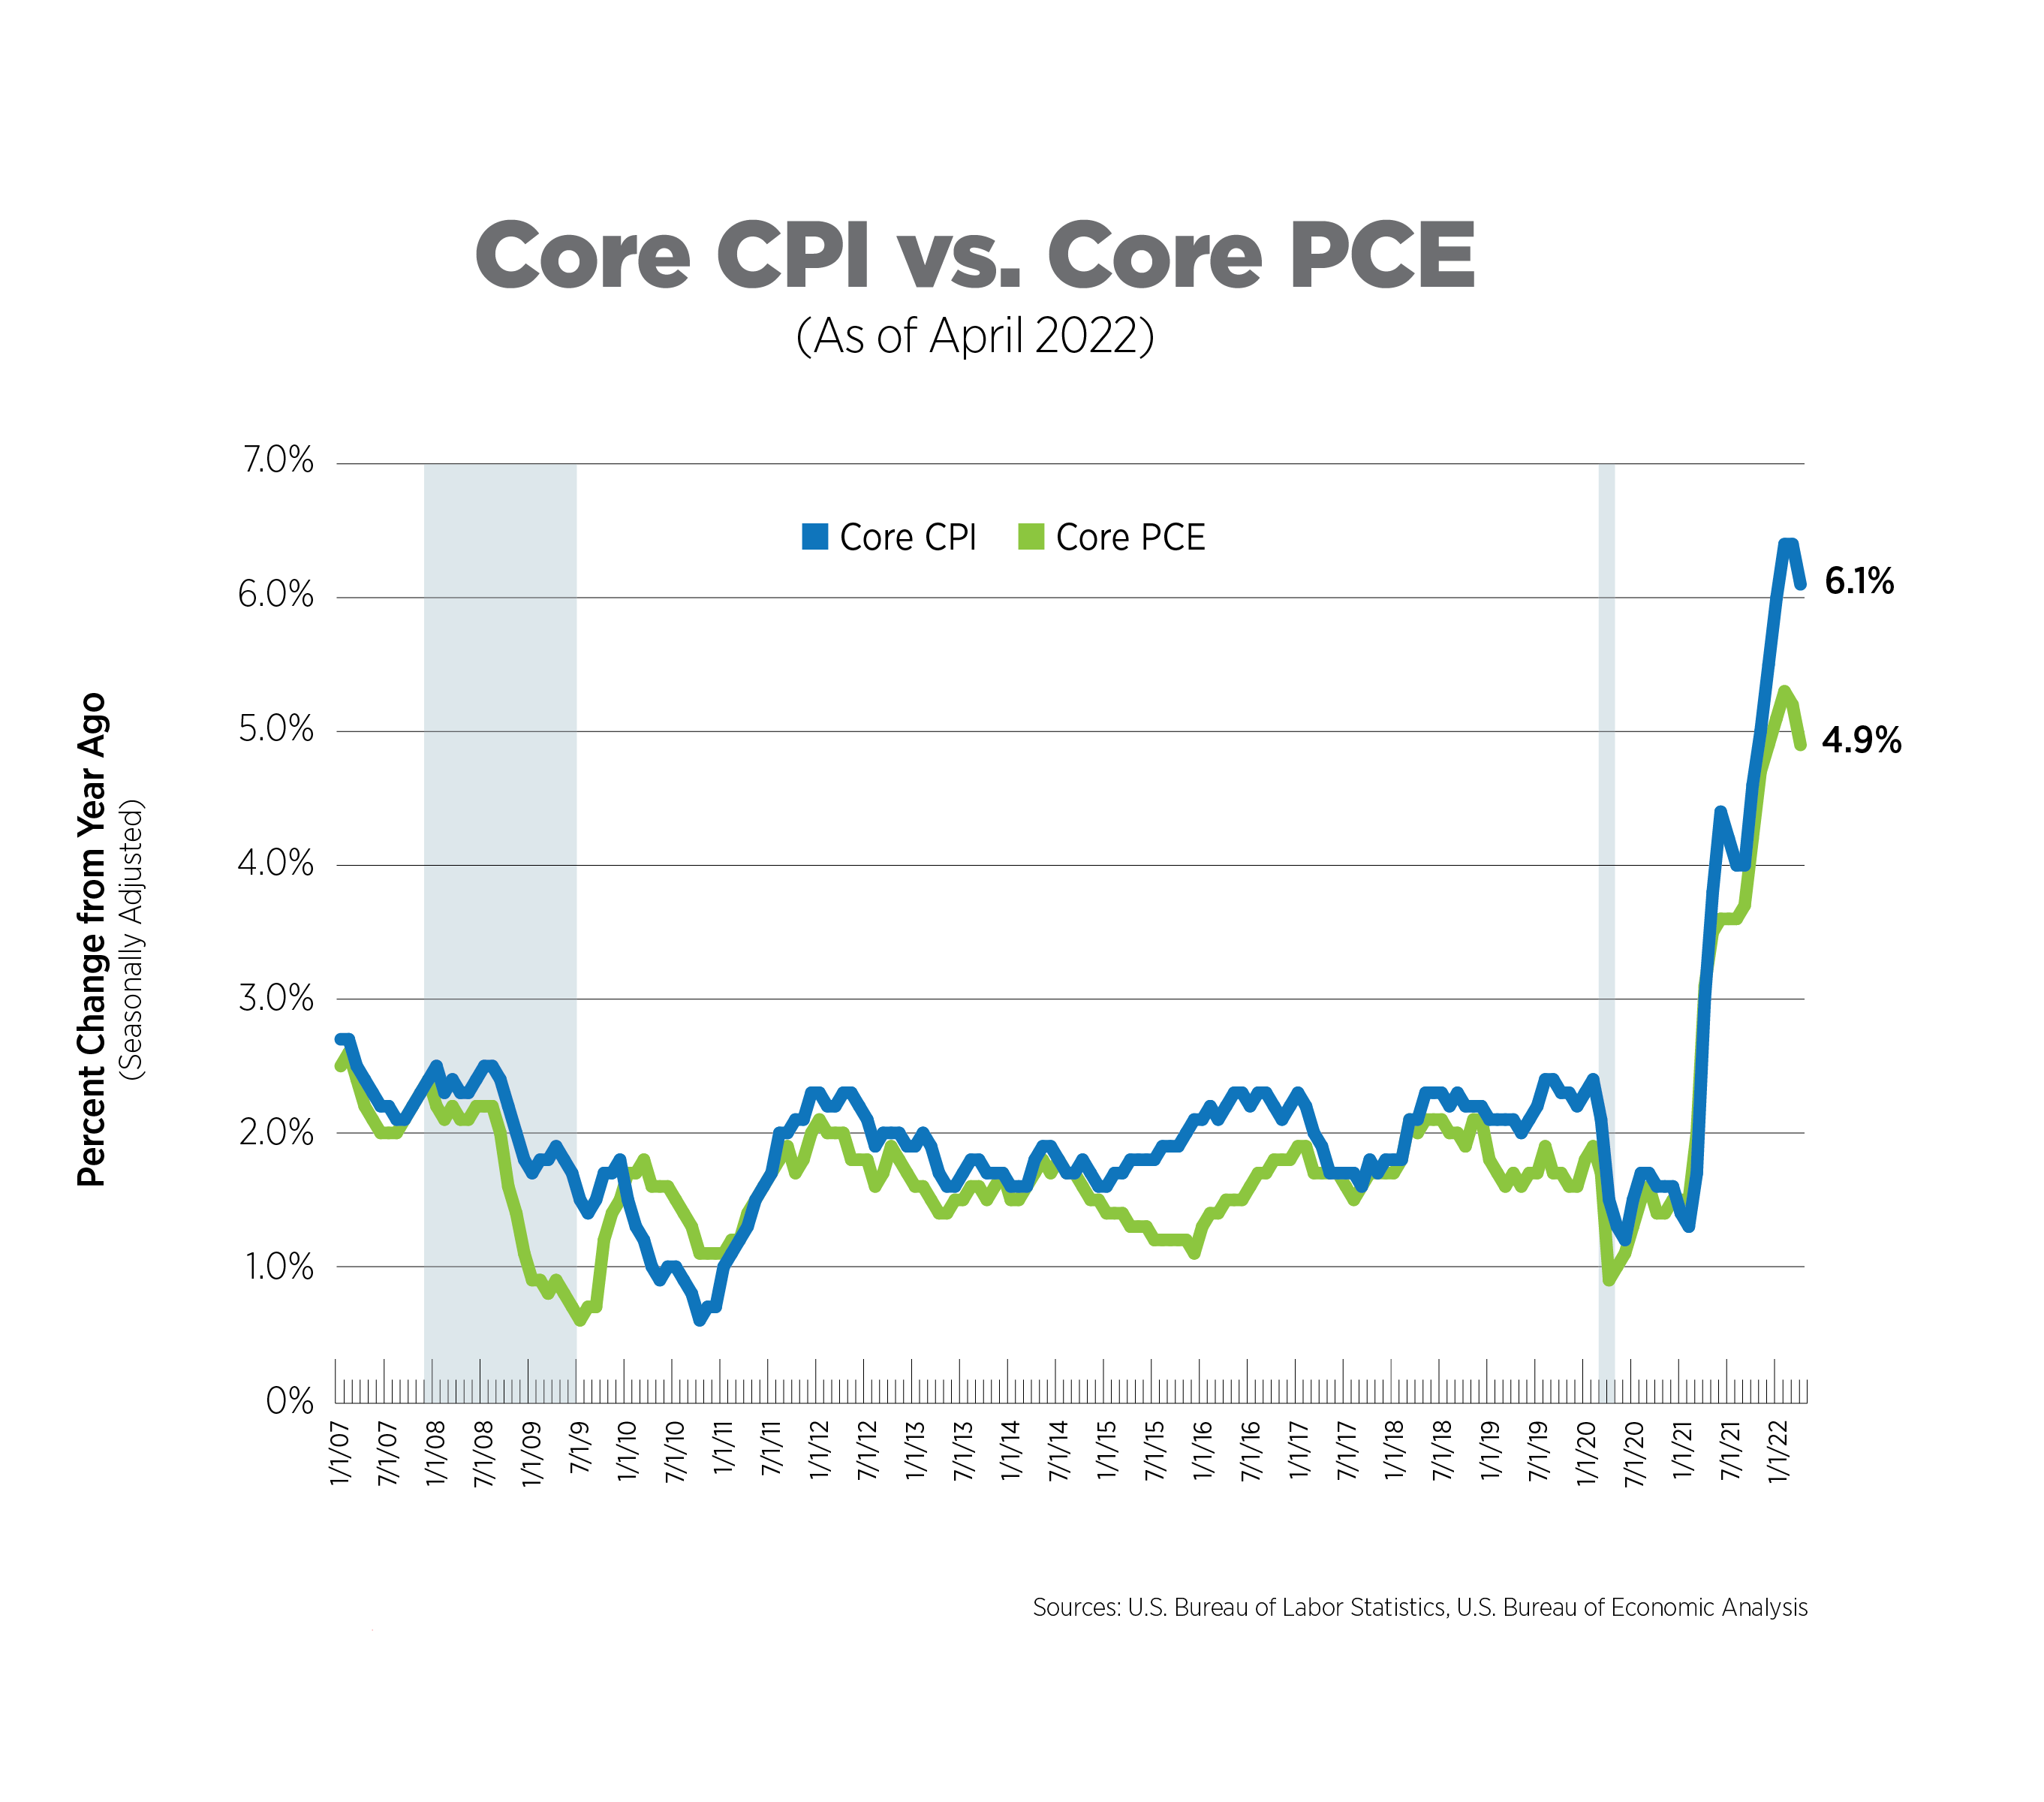 core cpi vs core pce as of april 2022